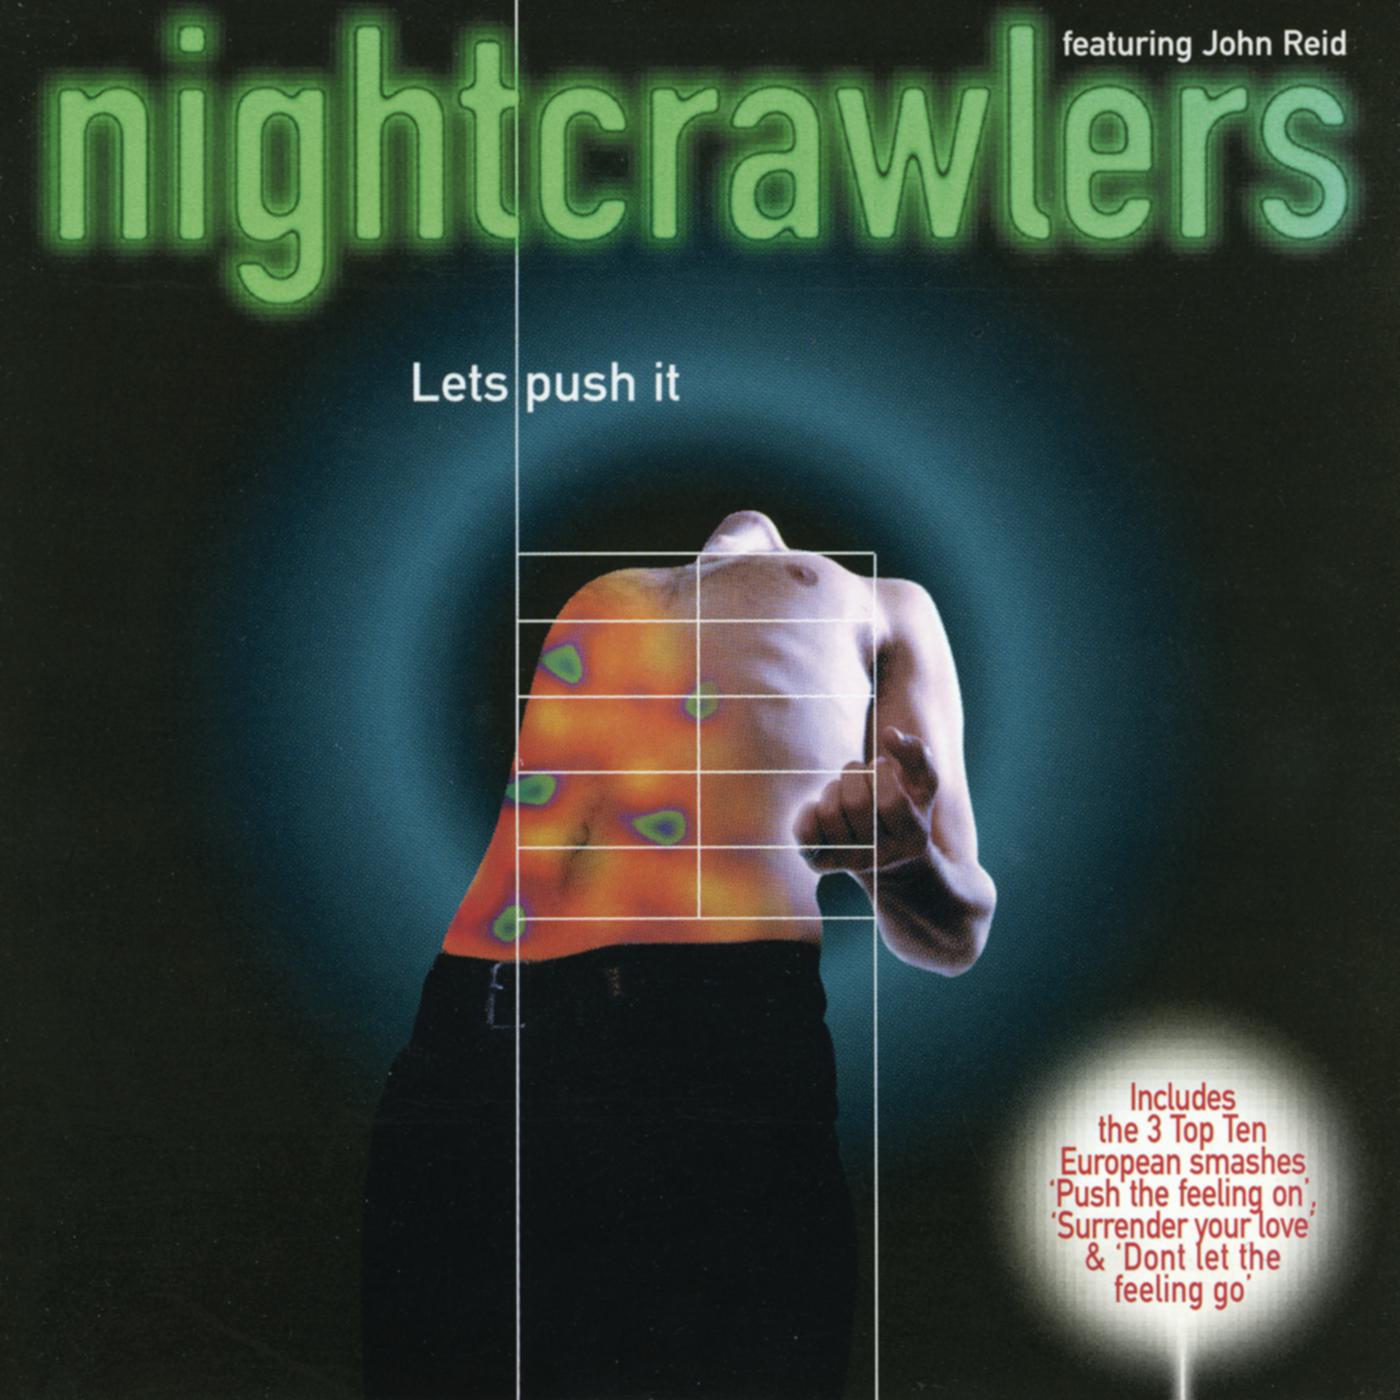 Nightcrawlers feeling on